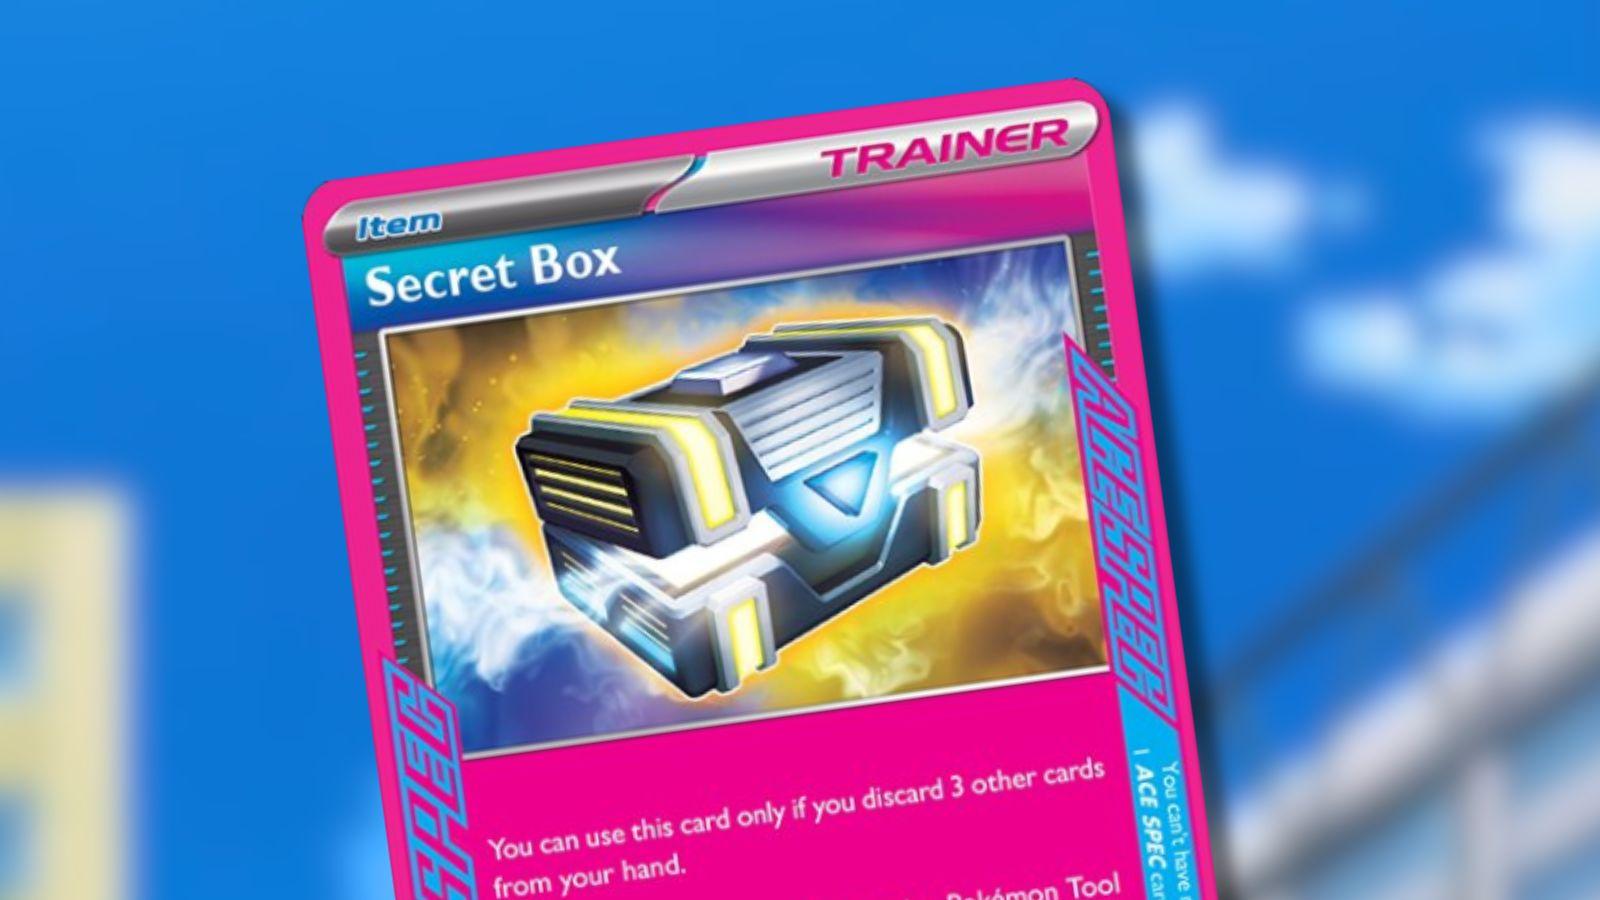 Secret Box ACE SPEC card with Pokemon anime background.